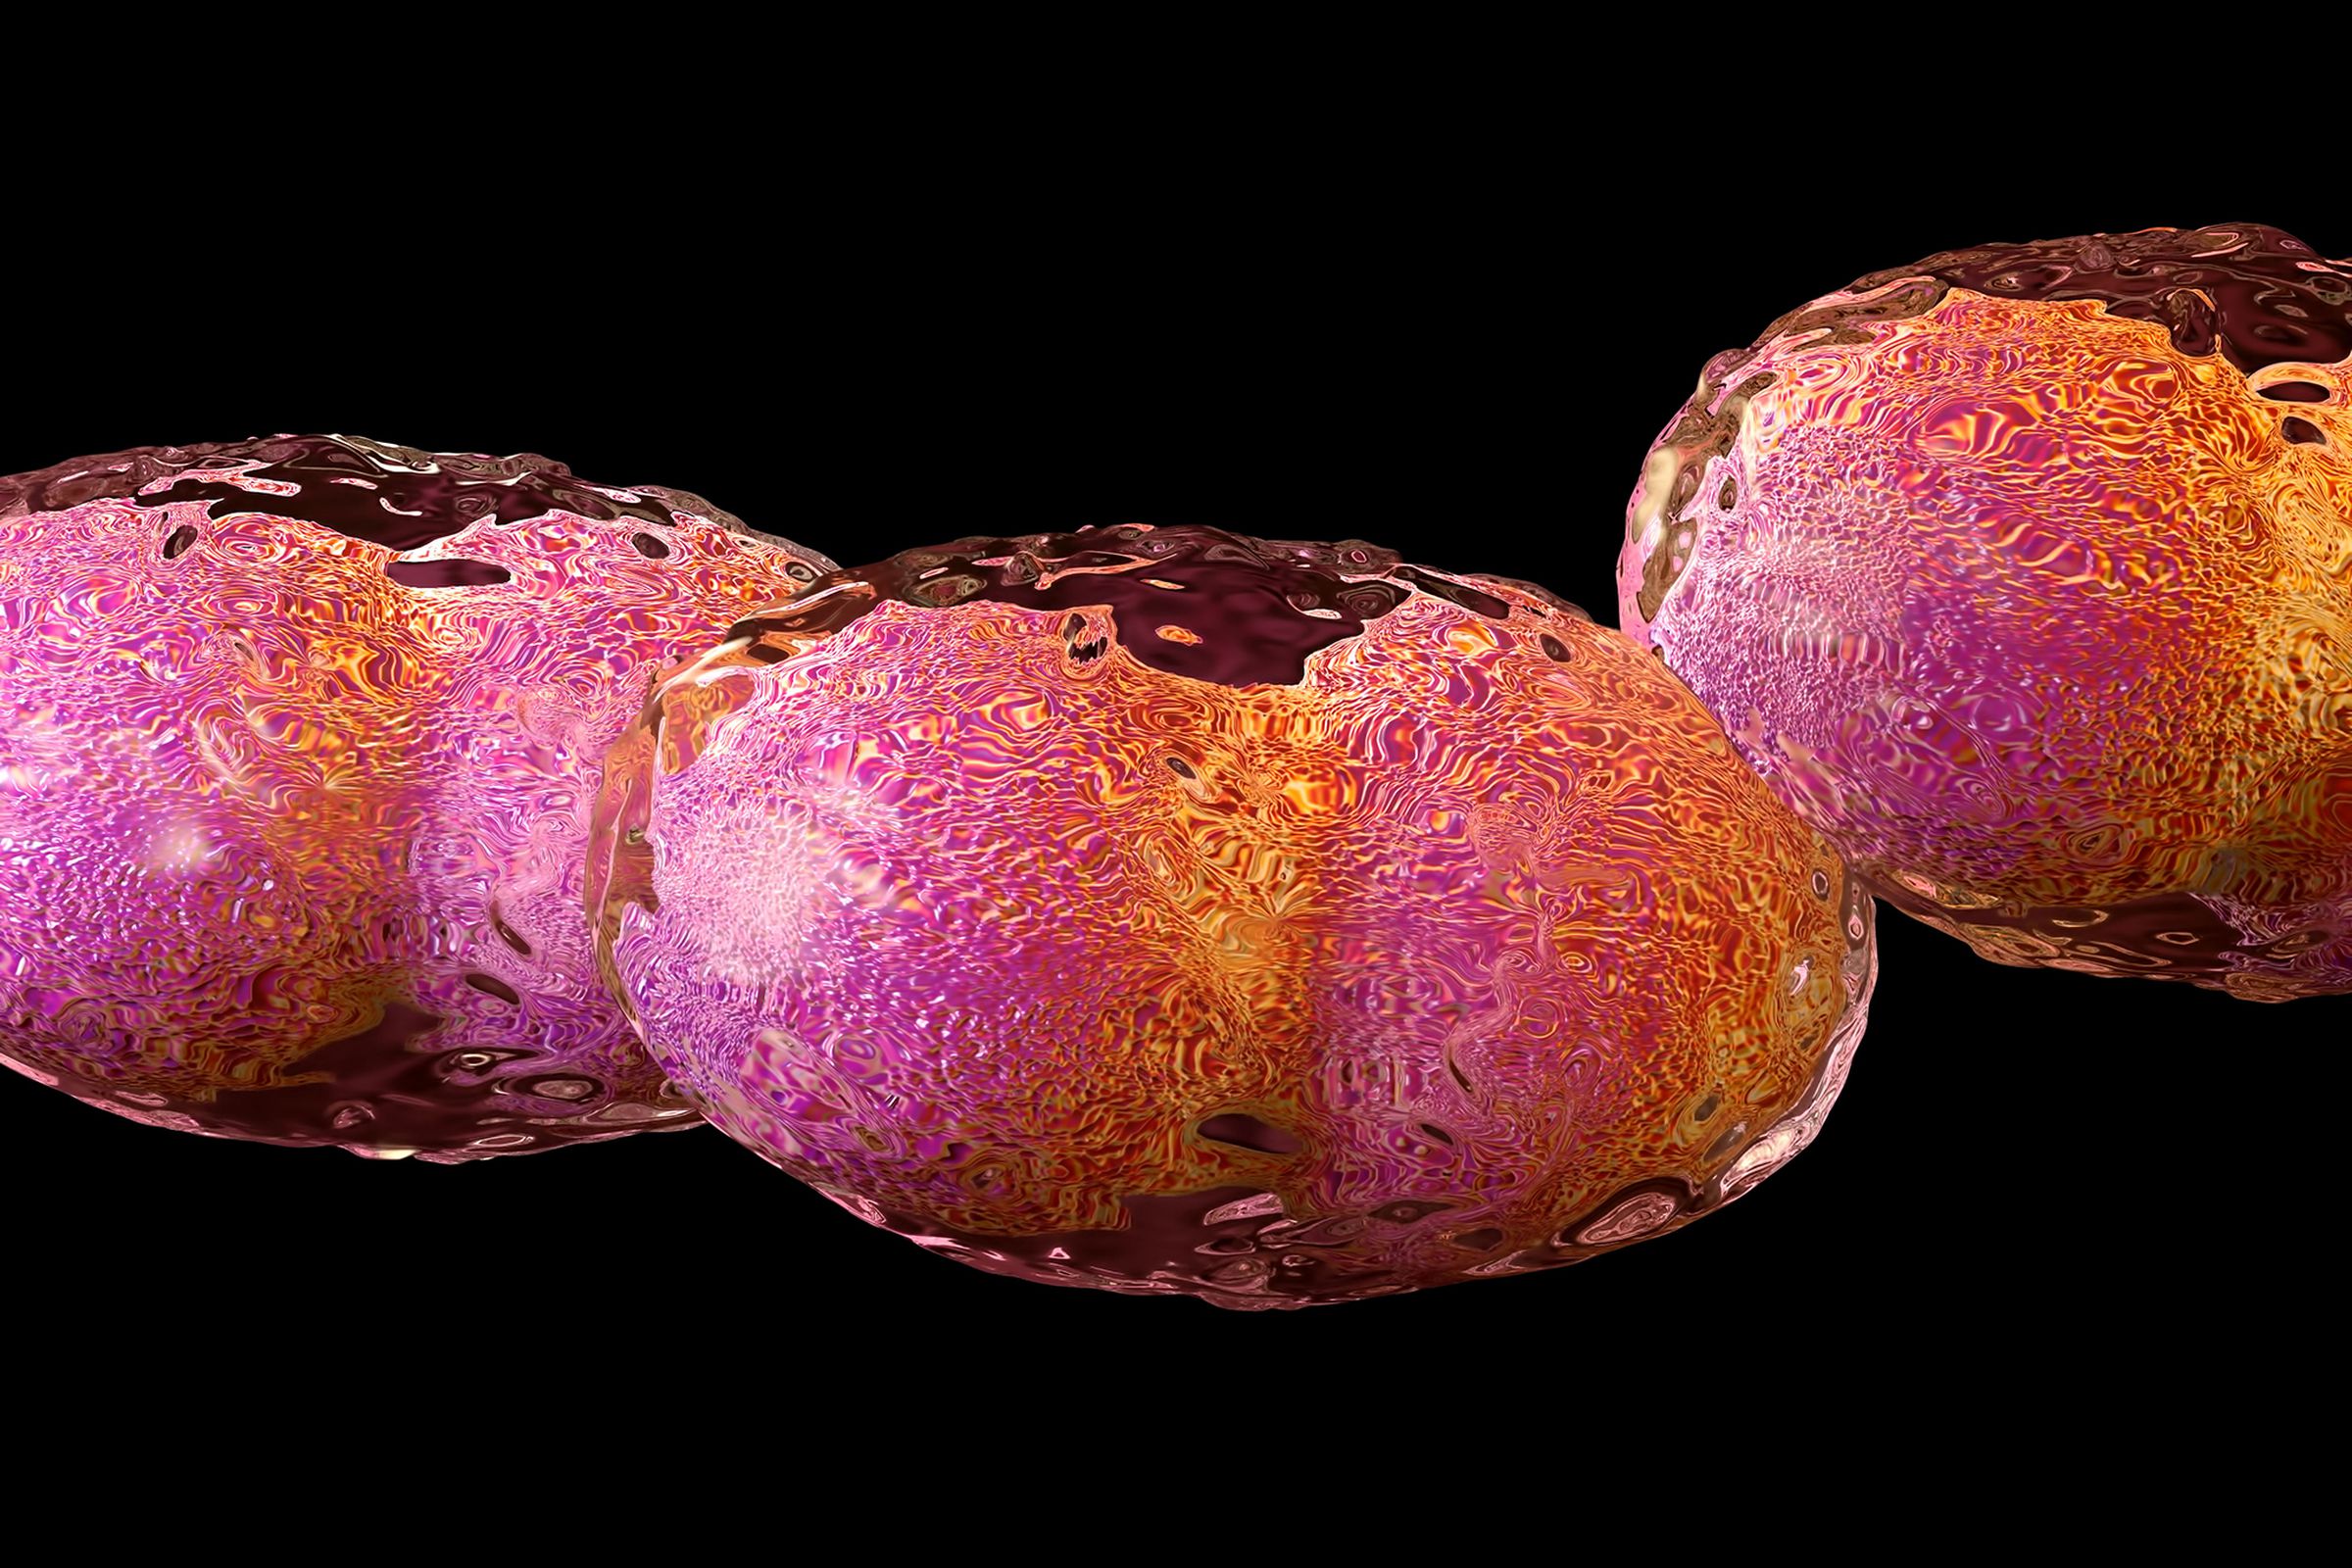 An artist’s rendering of the smallpox virus